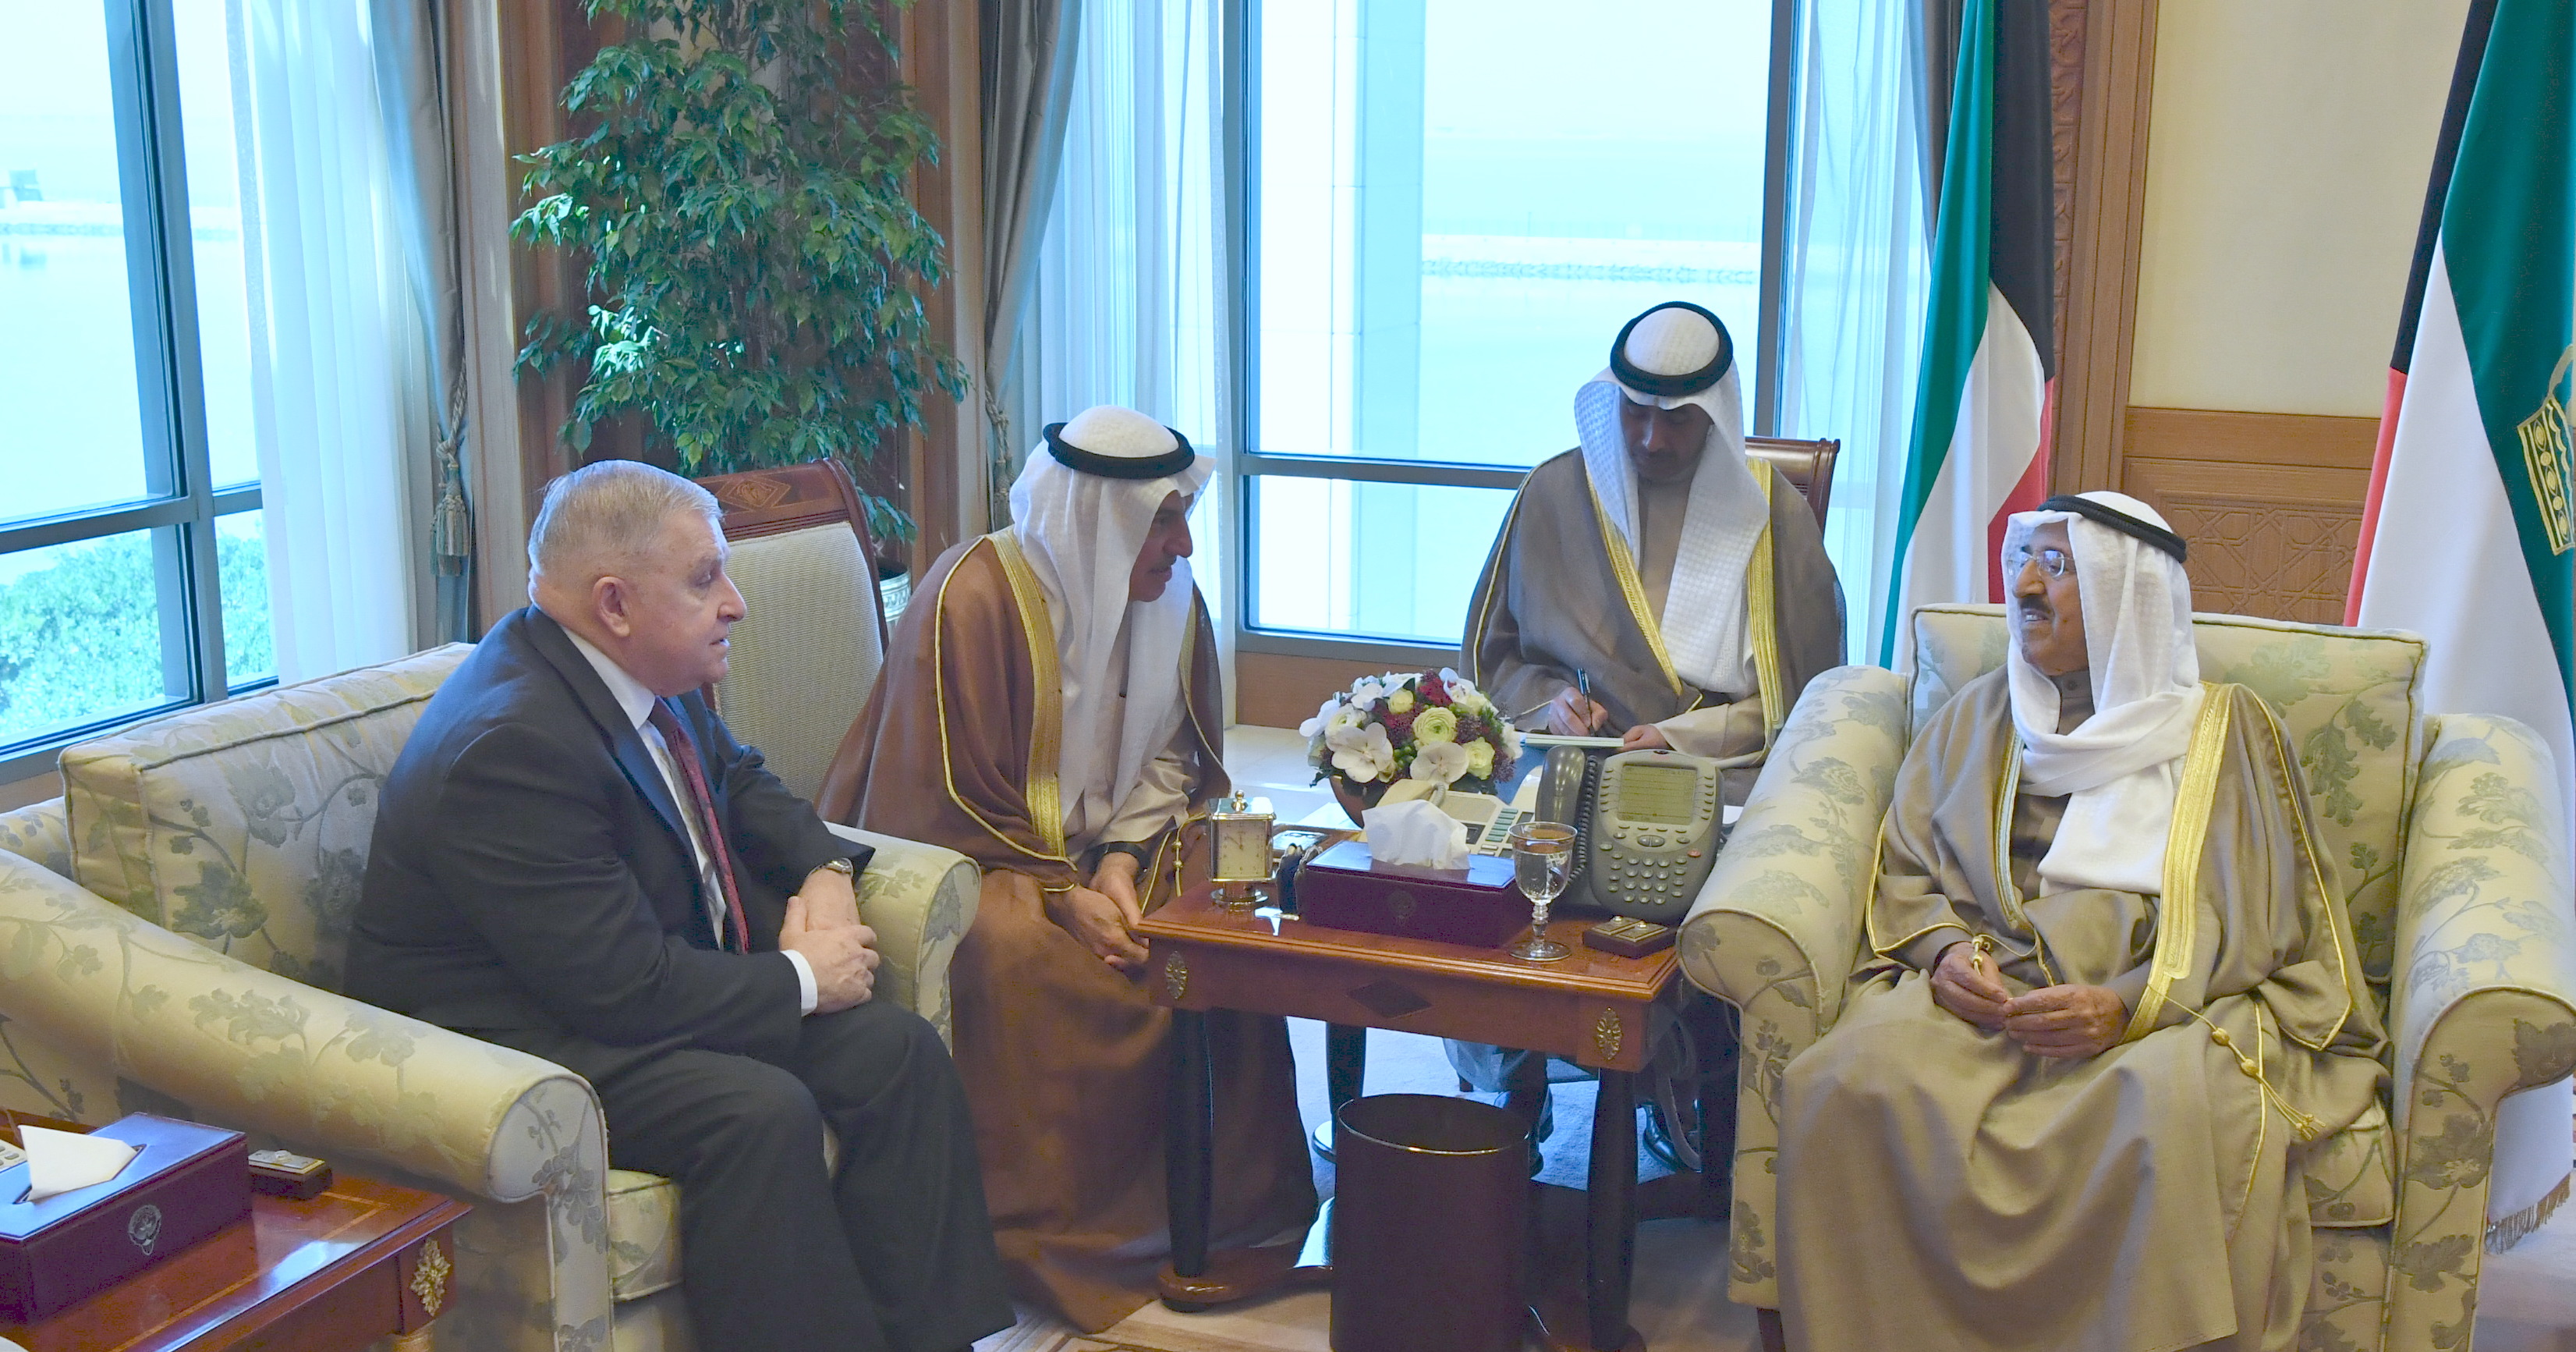 His Highness the Amir Sheikh Sabah Al-Ahmad Al-Jaber Al-Sabah received visiting retired US Marine Corps Gen. Anthony Zinni